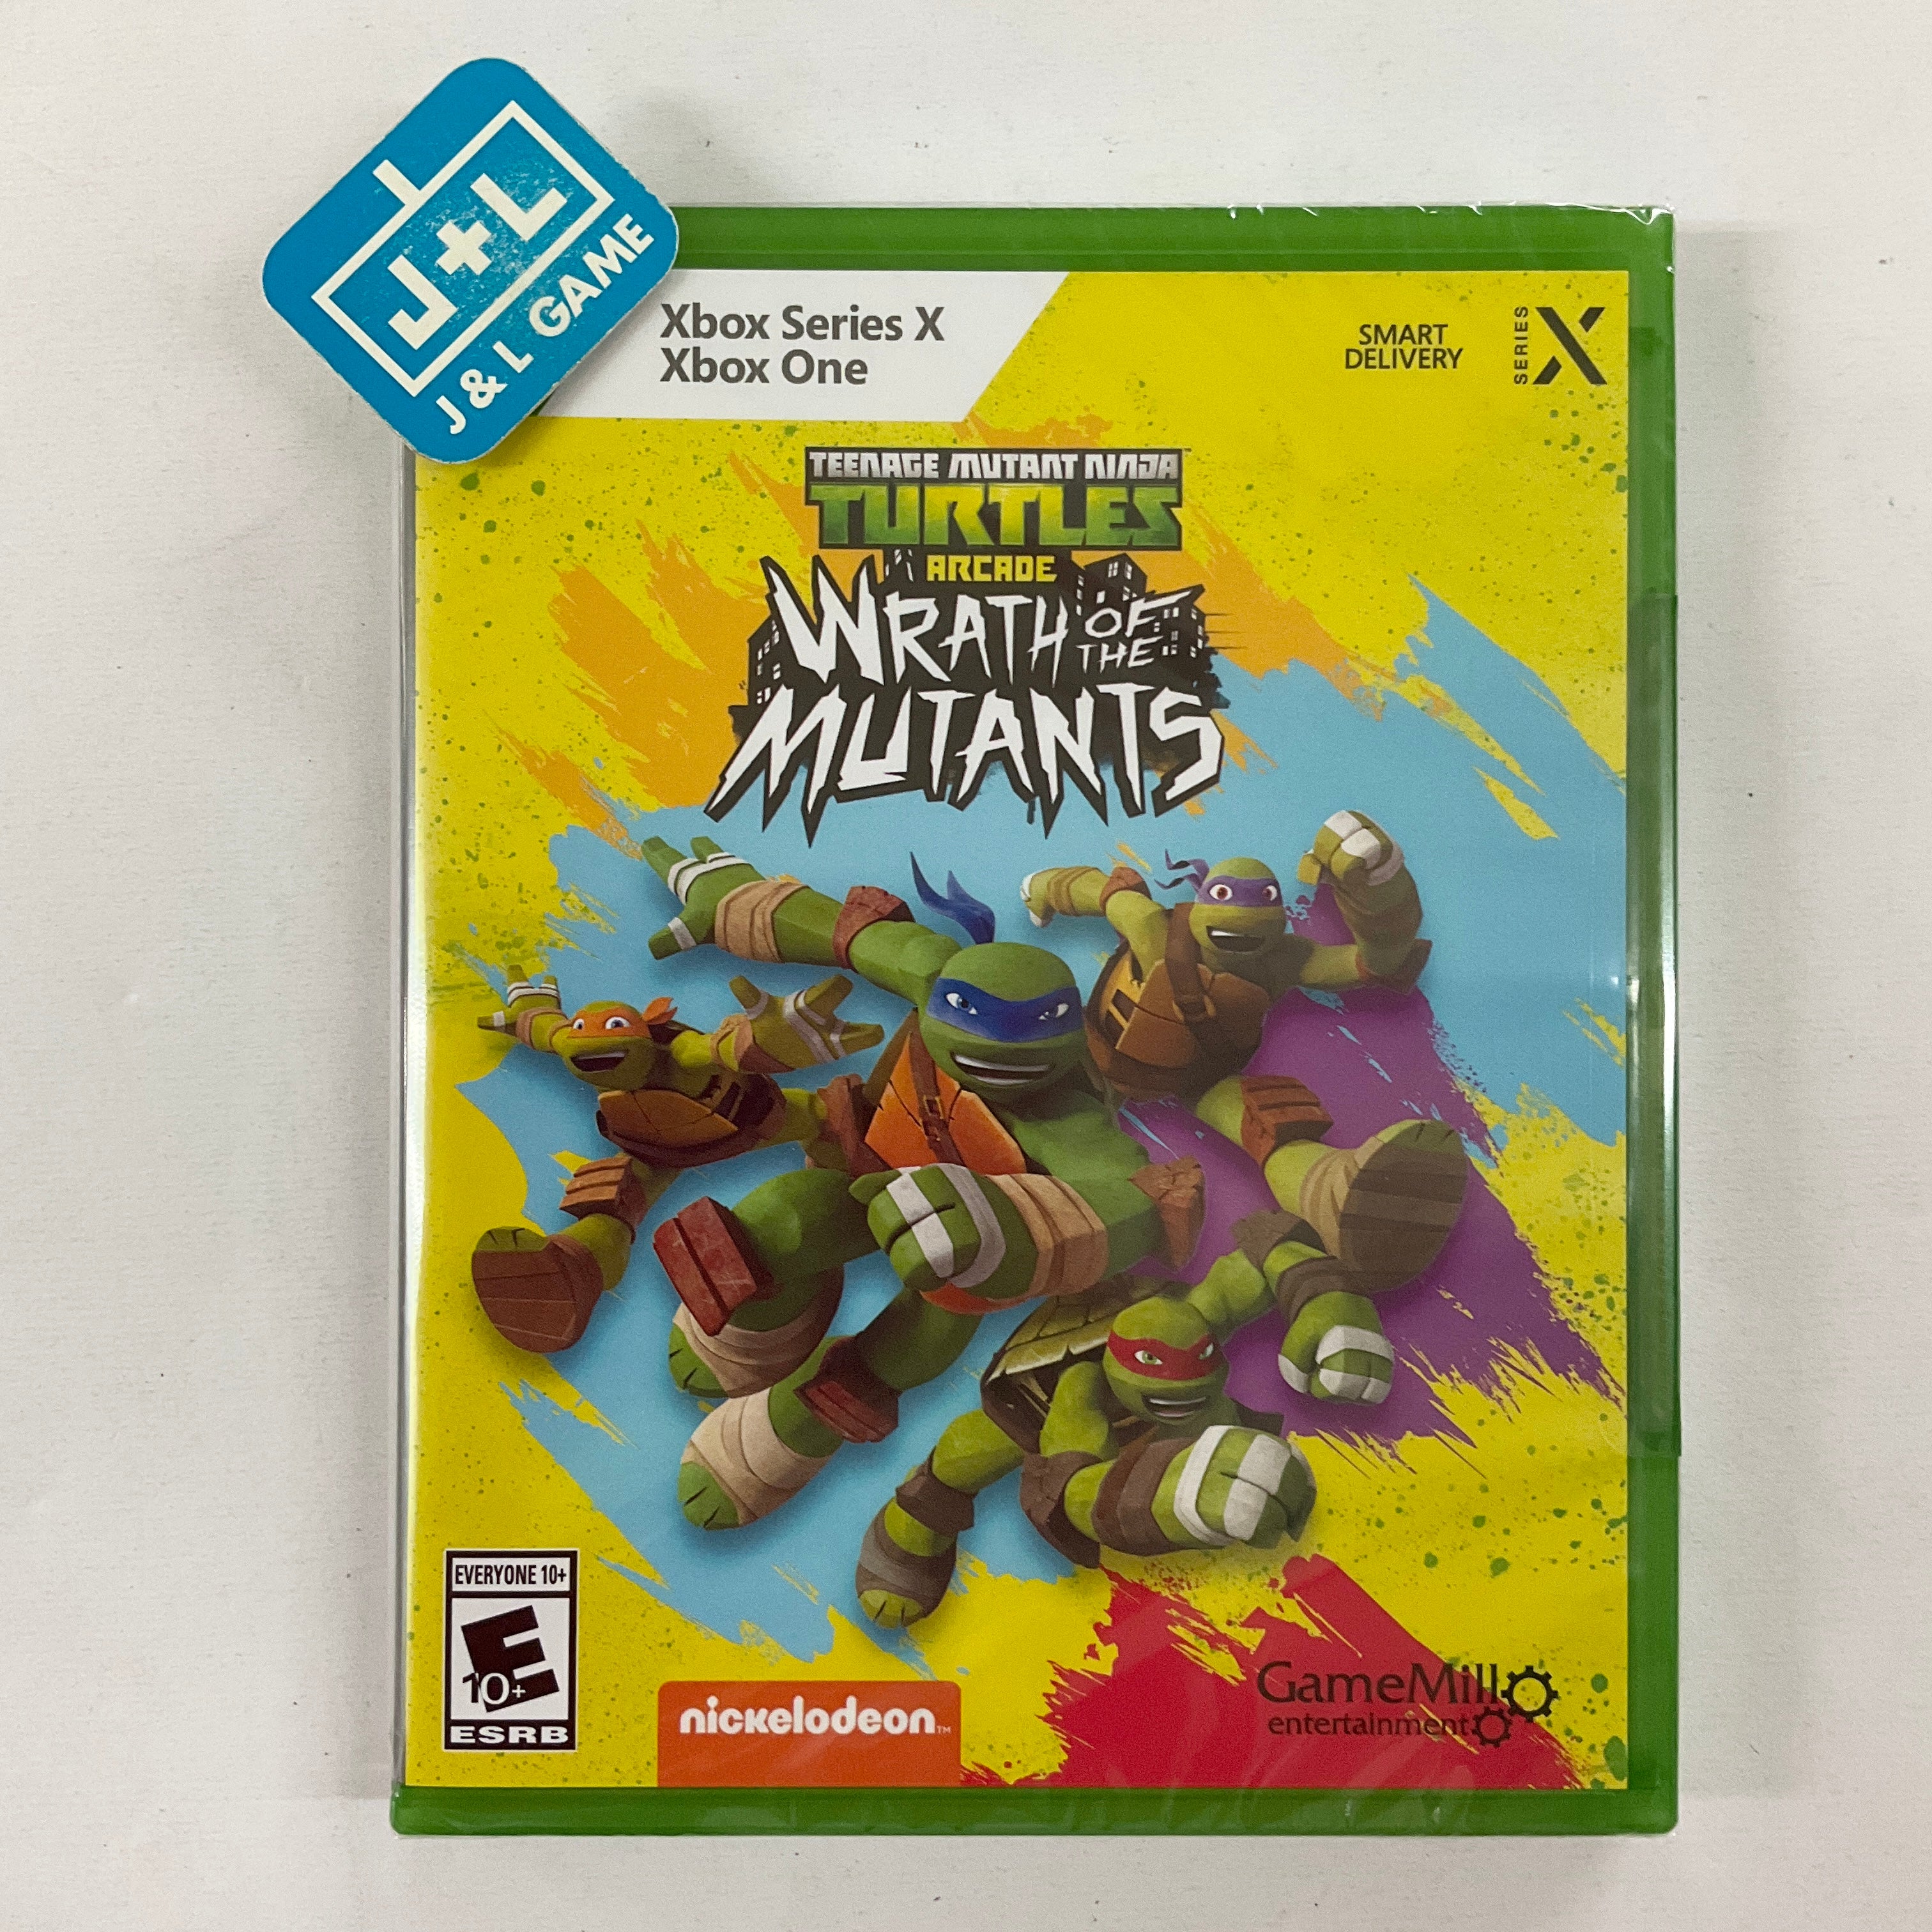 Teenage Mutant Ninja Turtles Arcade: Wrath of the Mutants - (XSX) Xbox Series X